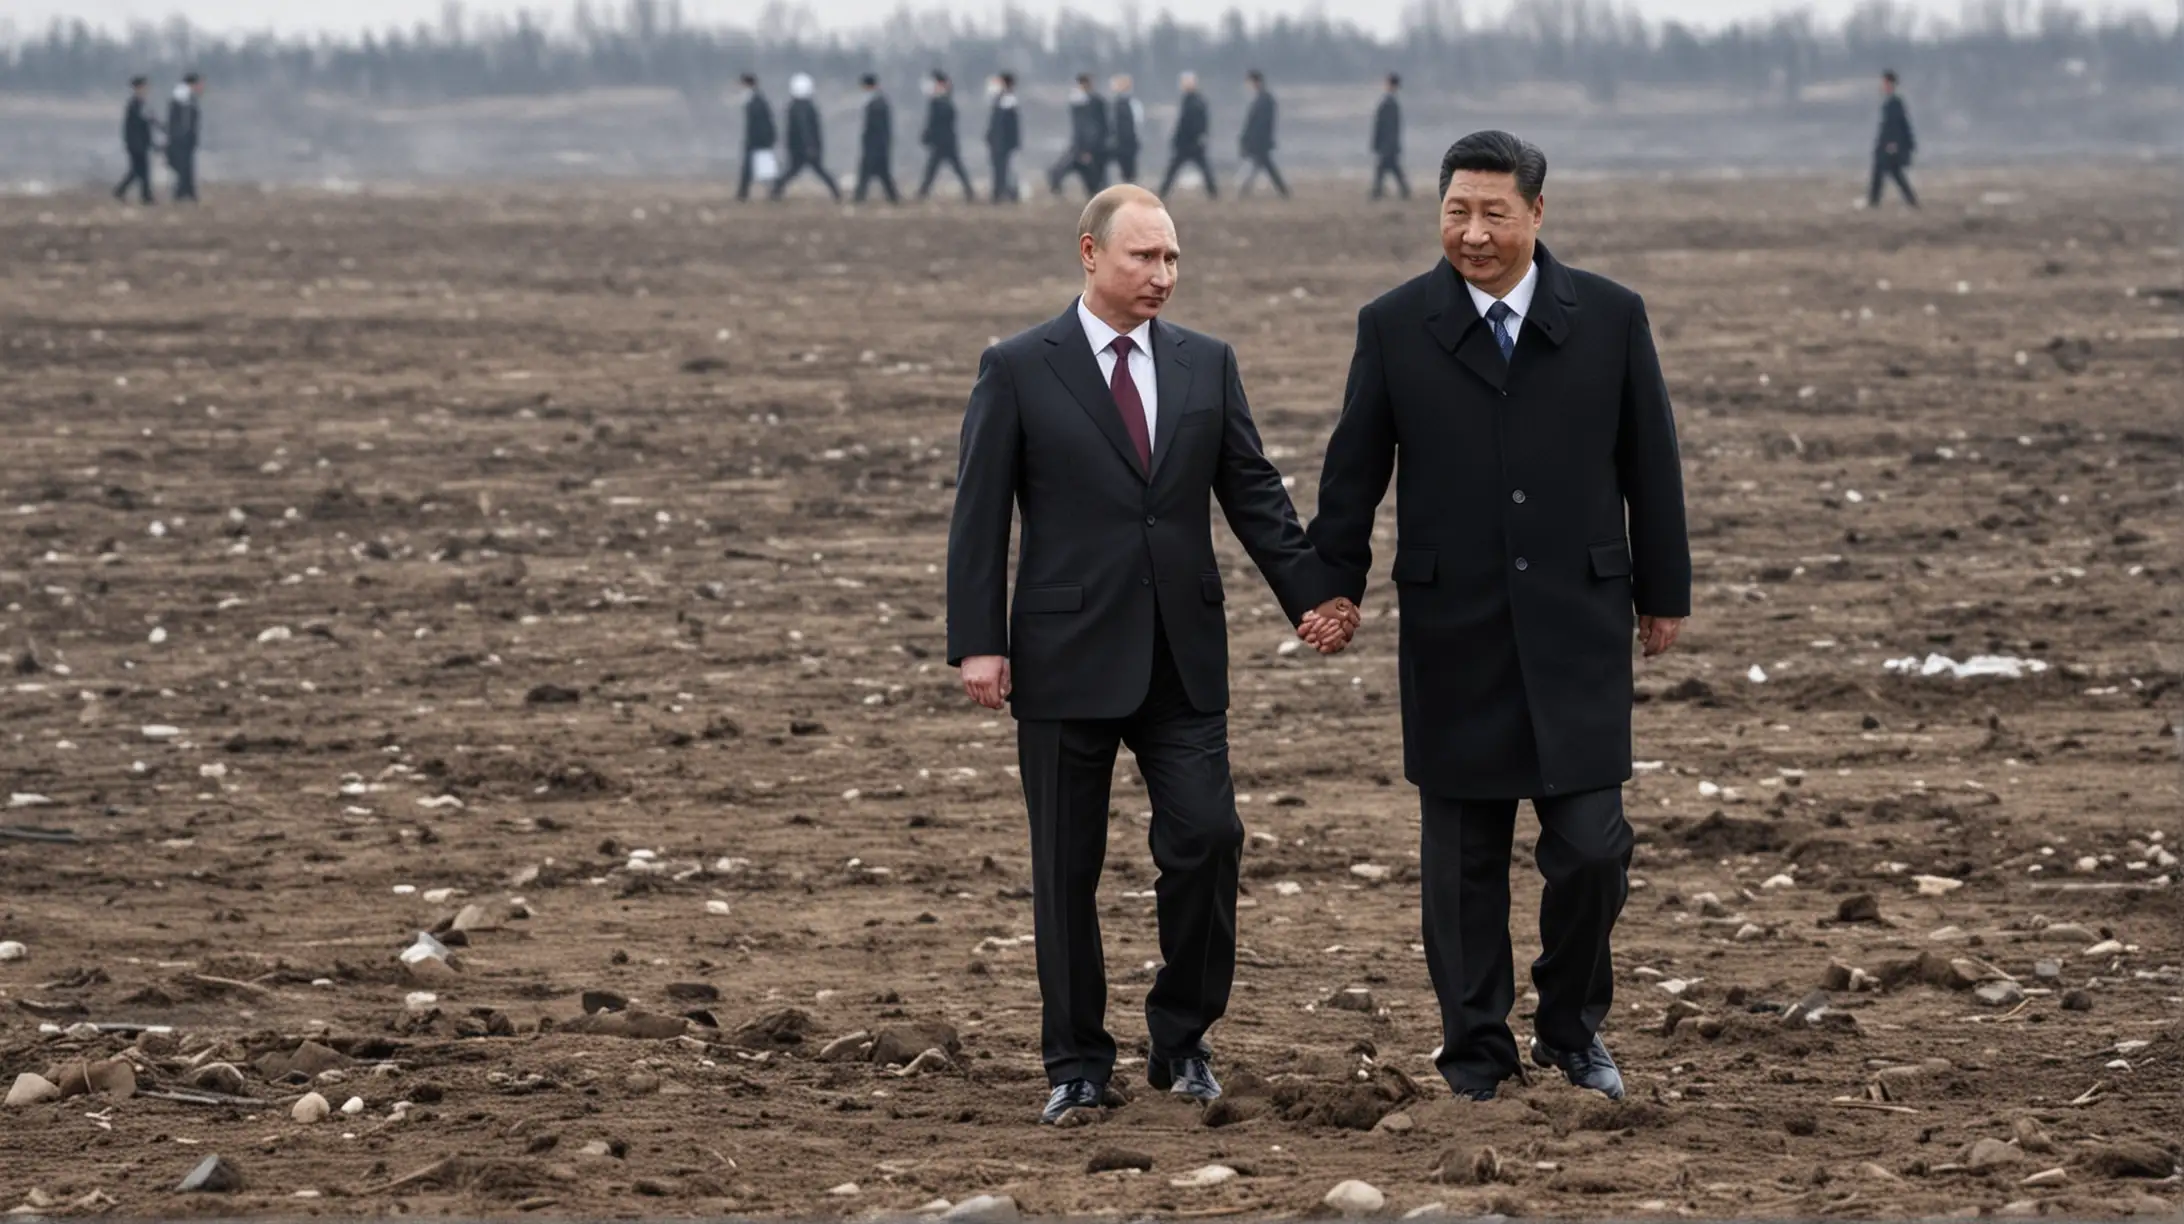 Leaders Vladimir Putin and Xi Jinping Walking Hand in Hand Across Battlefield